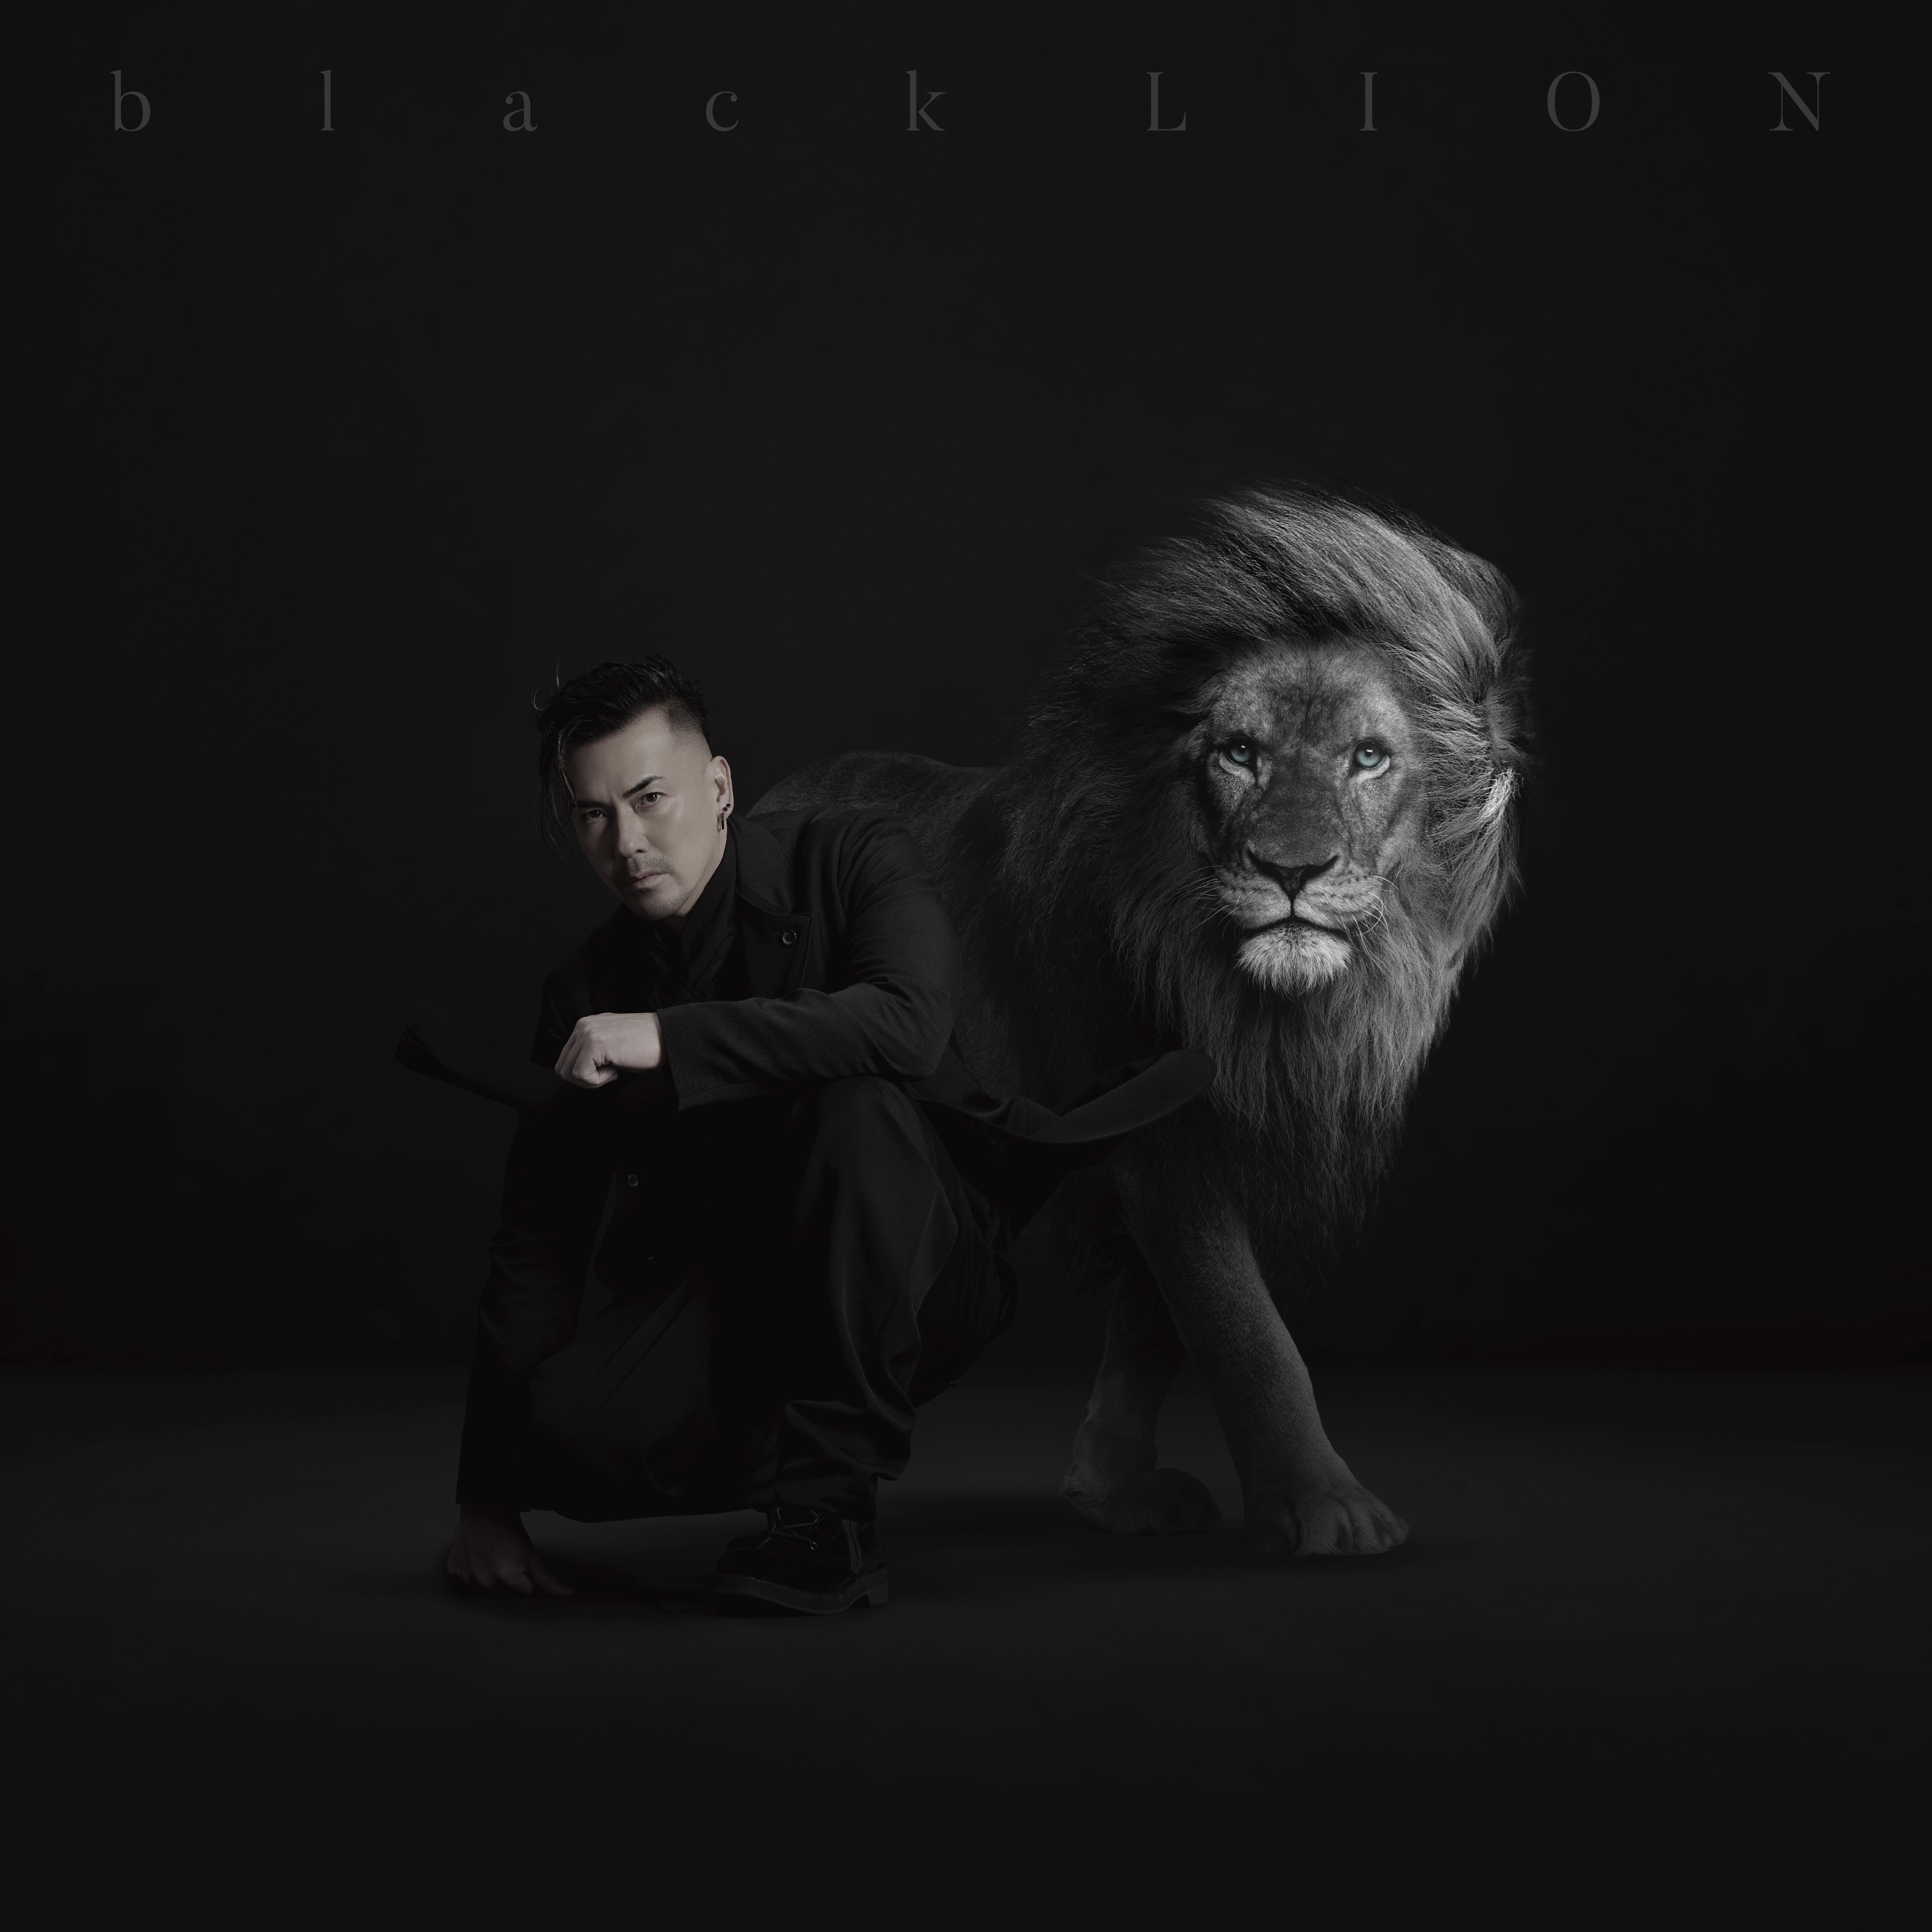 米倉利紀 27th album「black LION」